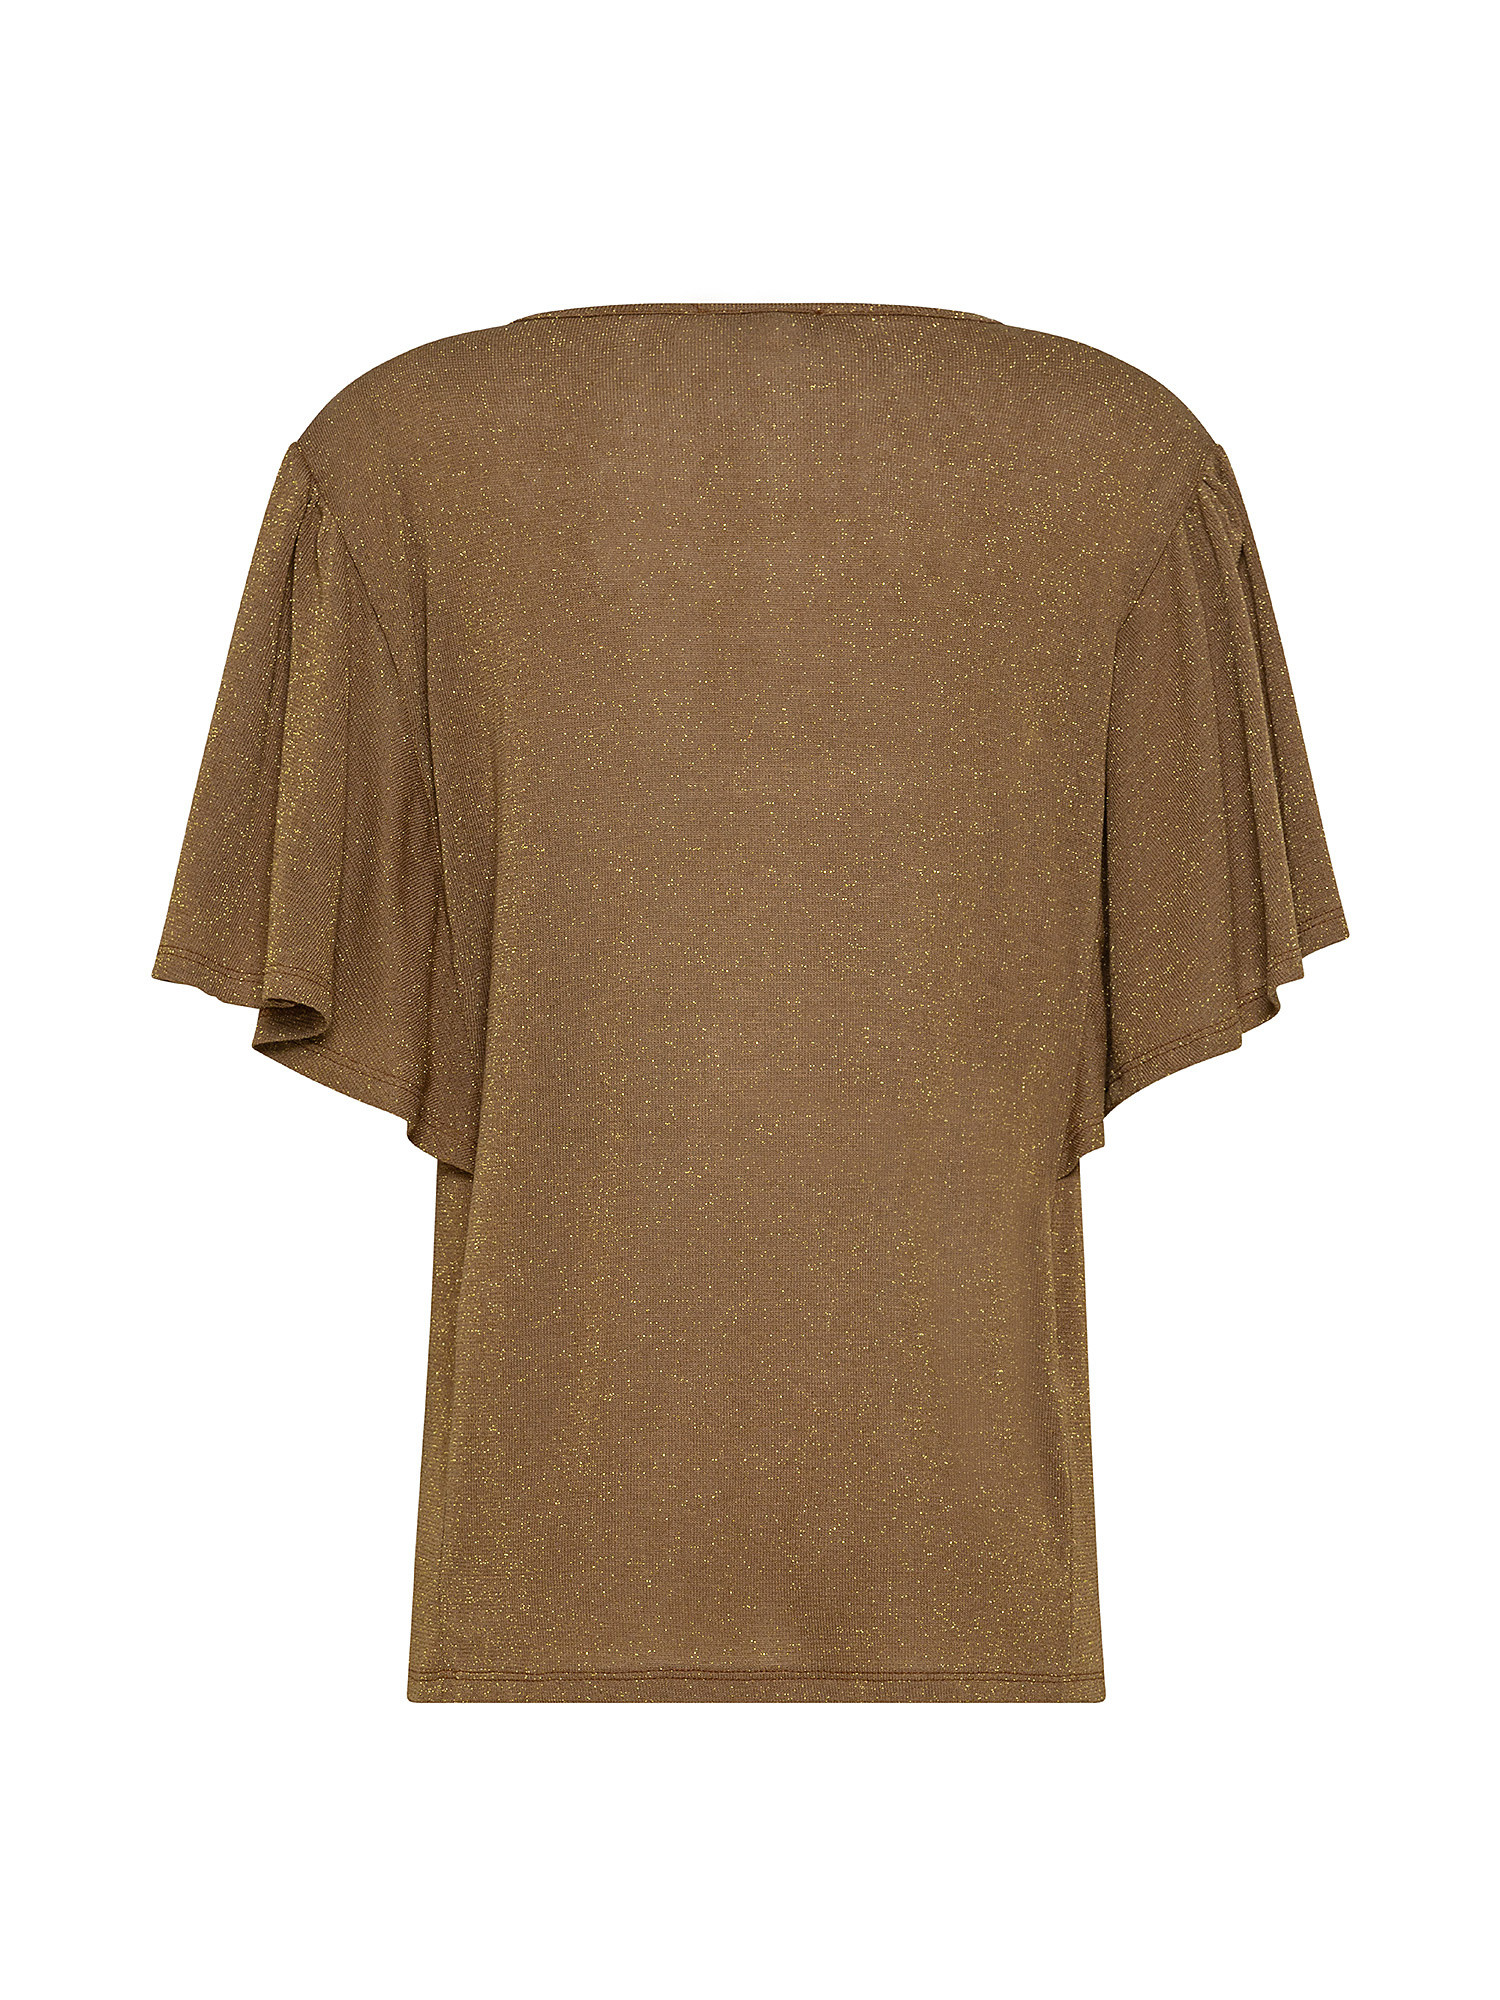 Bat sleeve T-shirt, Brown, large image number 1